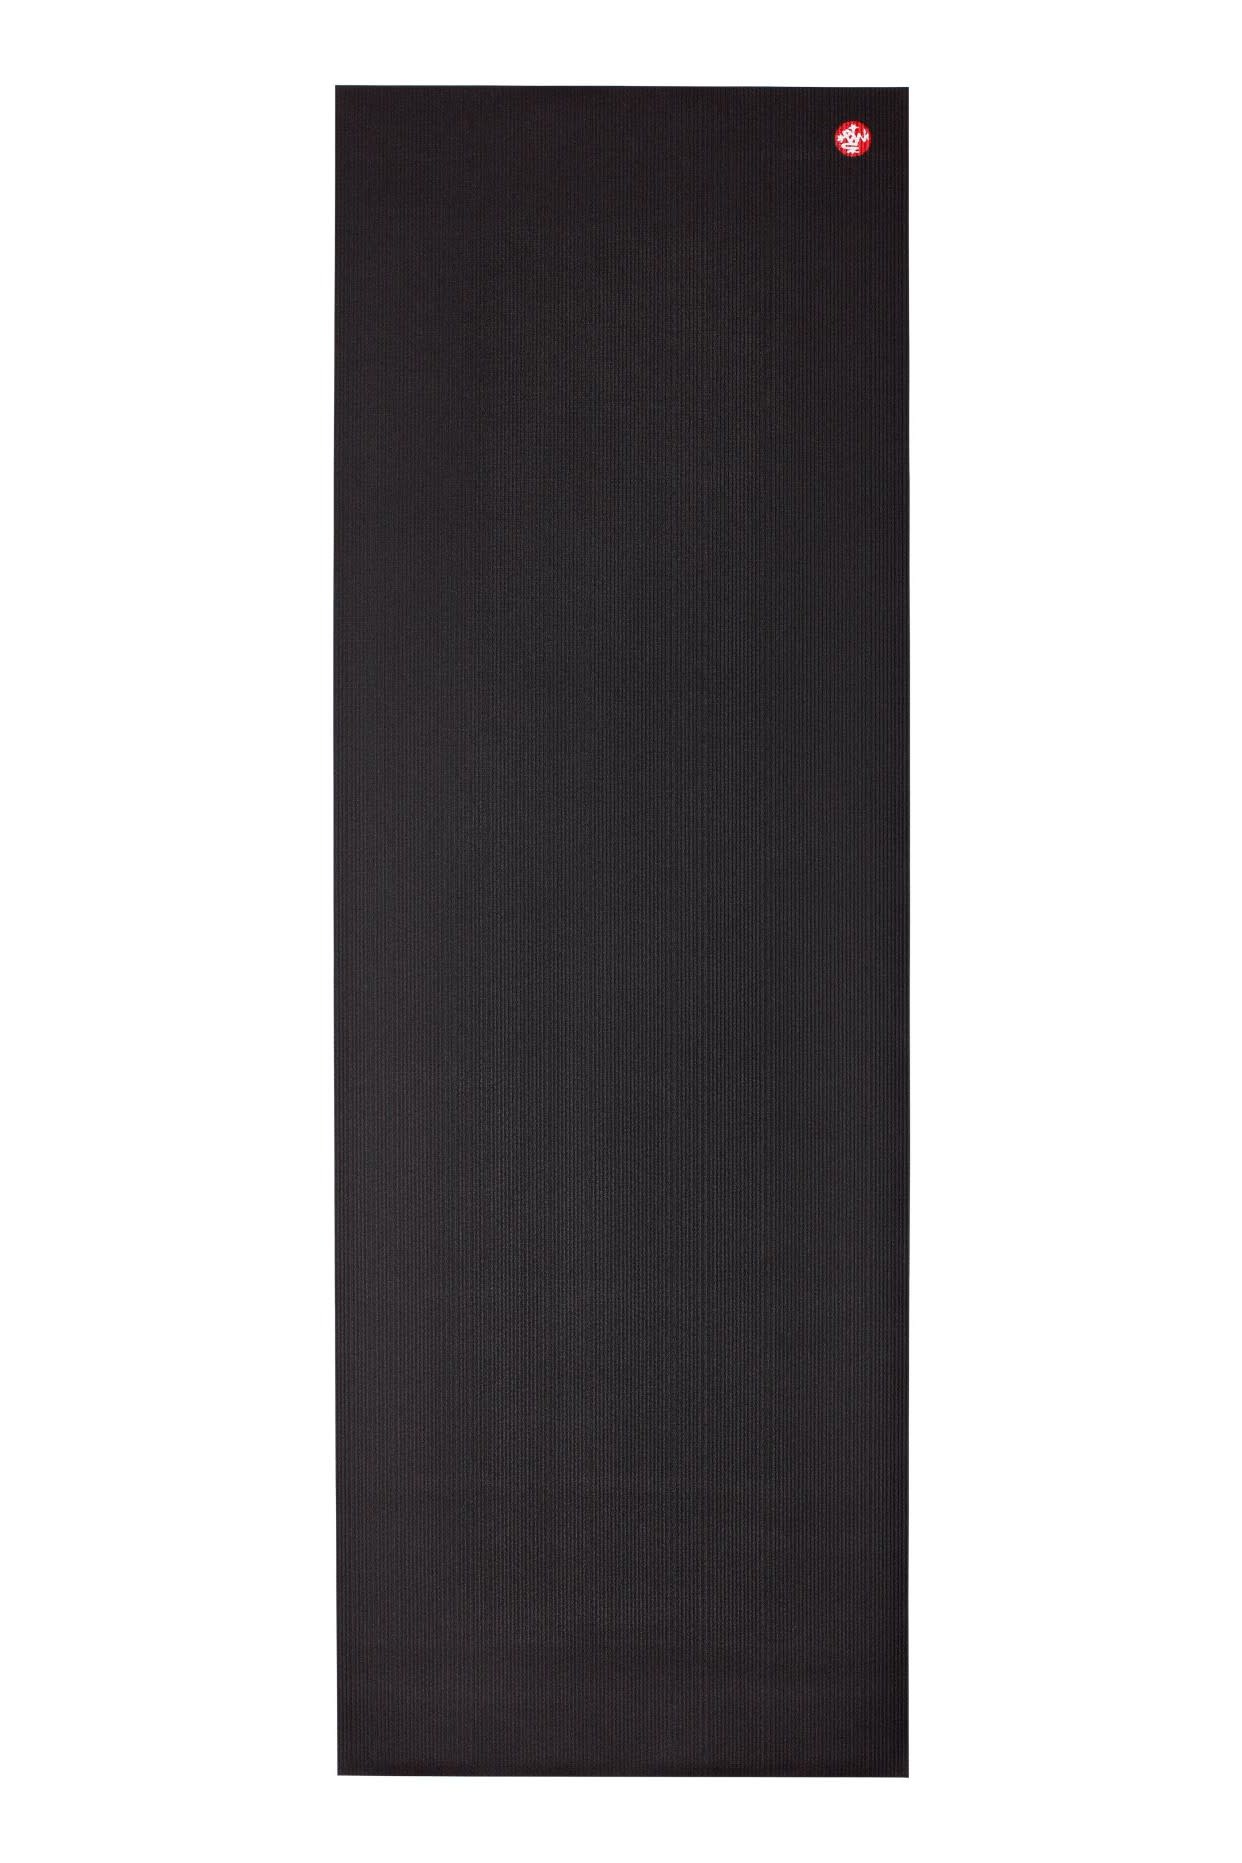 Manduka Prolite Yoga Mat 200cm 61cm 4.7mm - Black-1